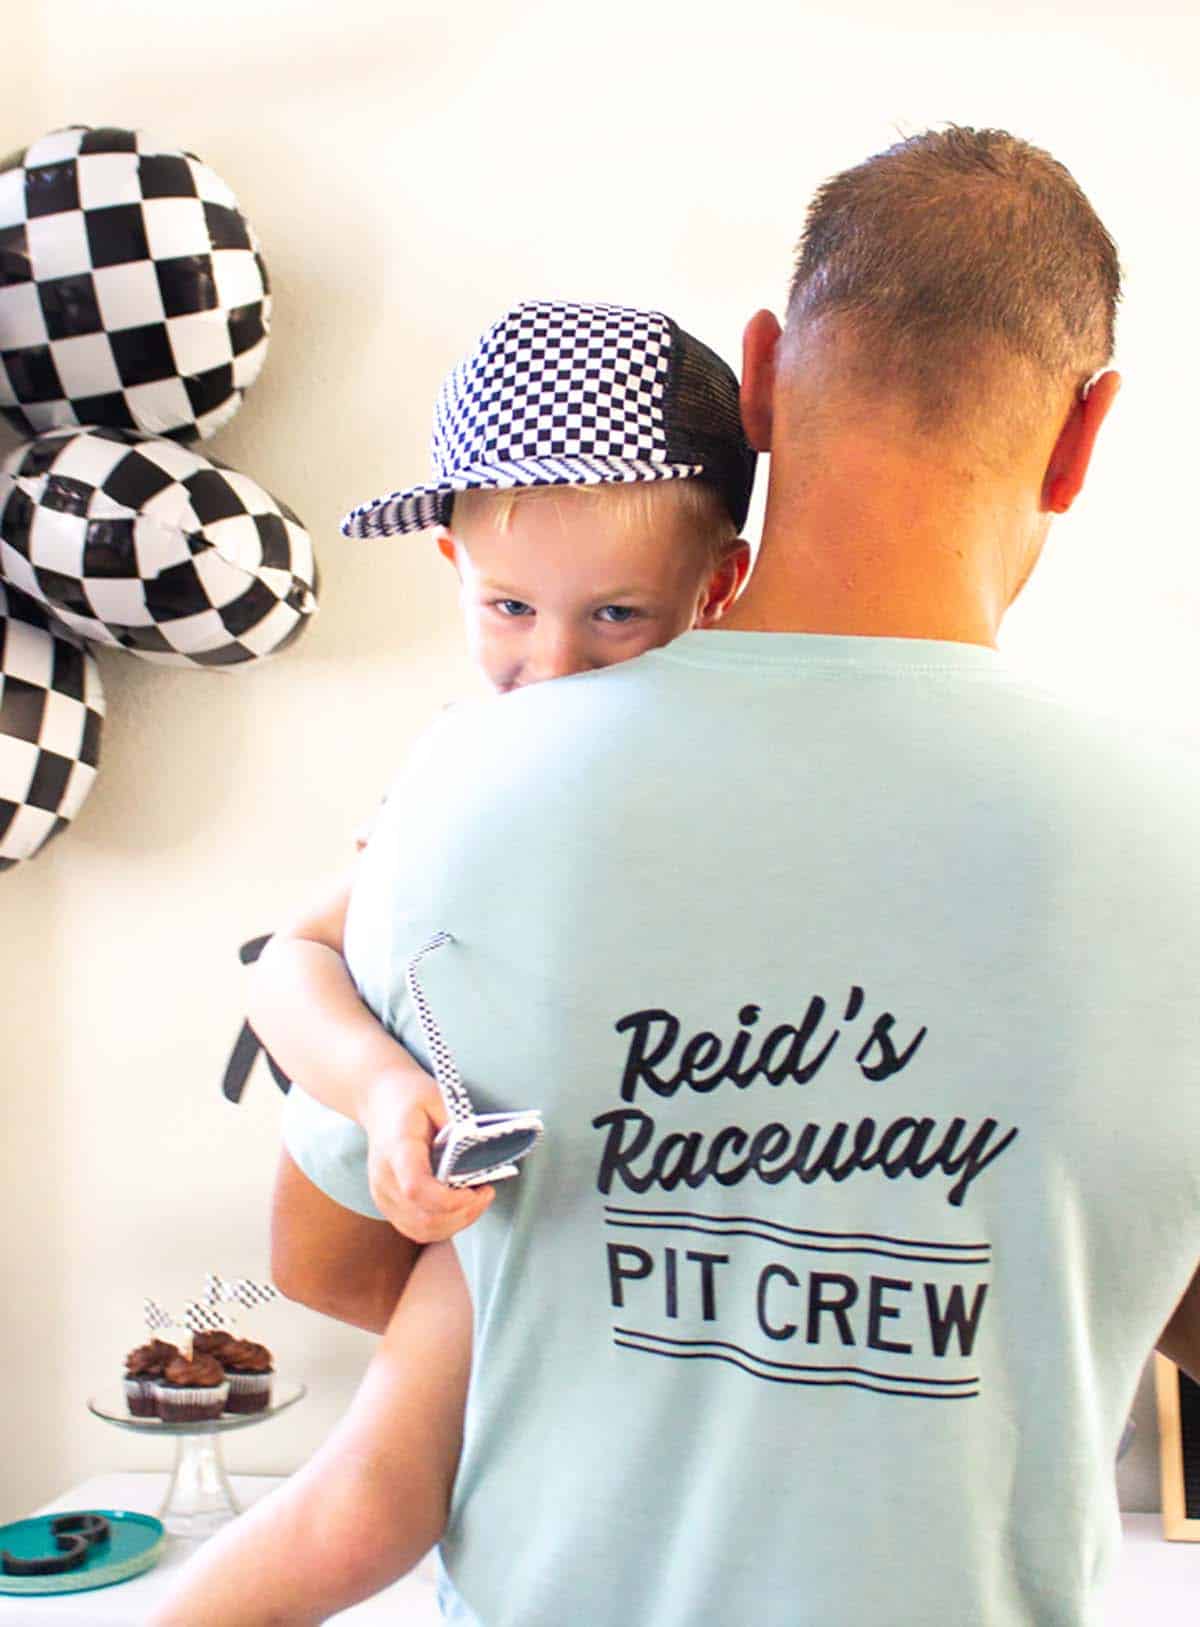 "Pit Crew" shirt for race car birthday